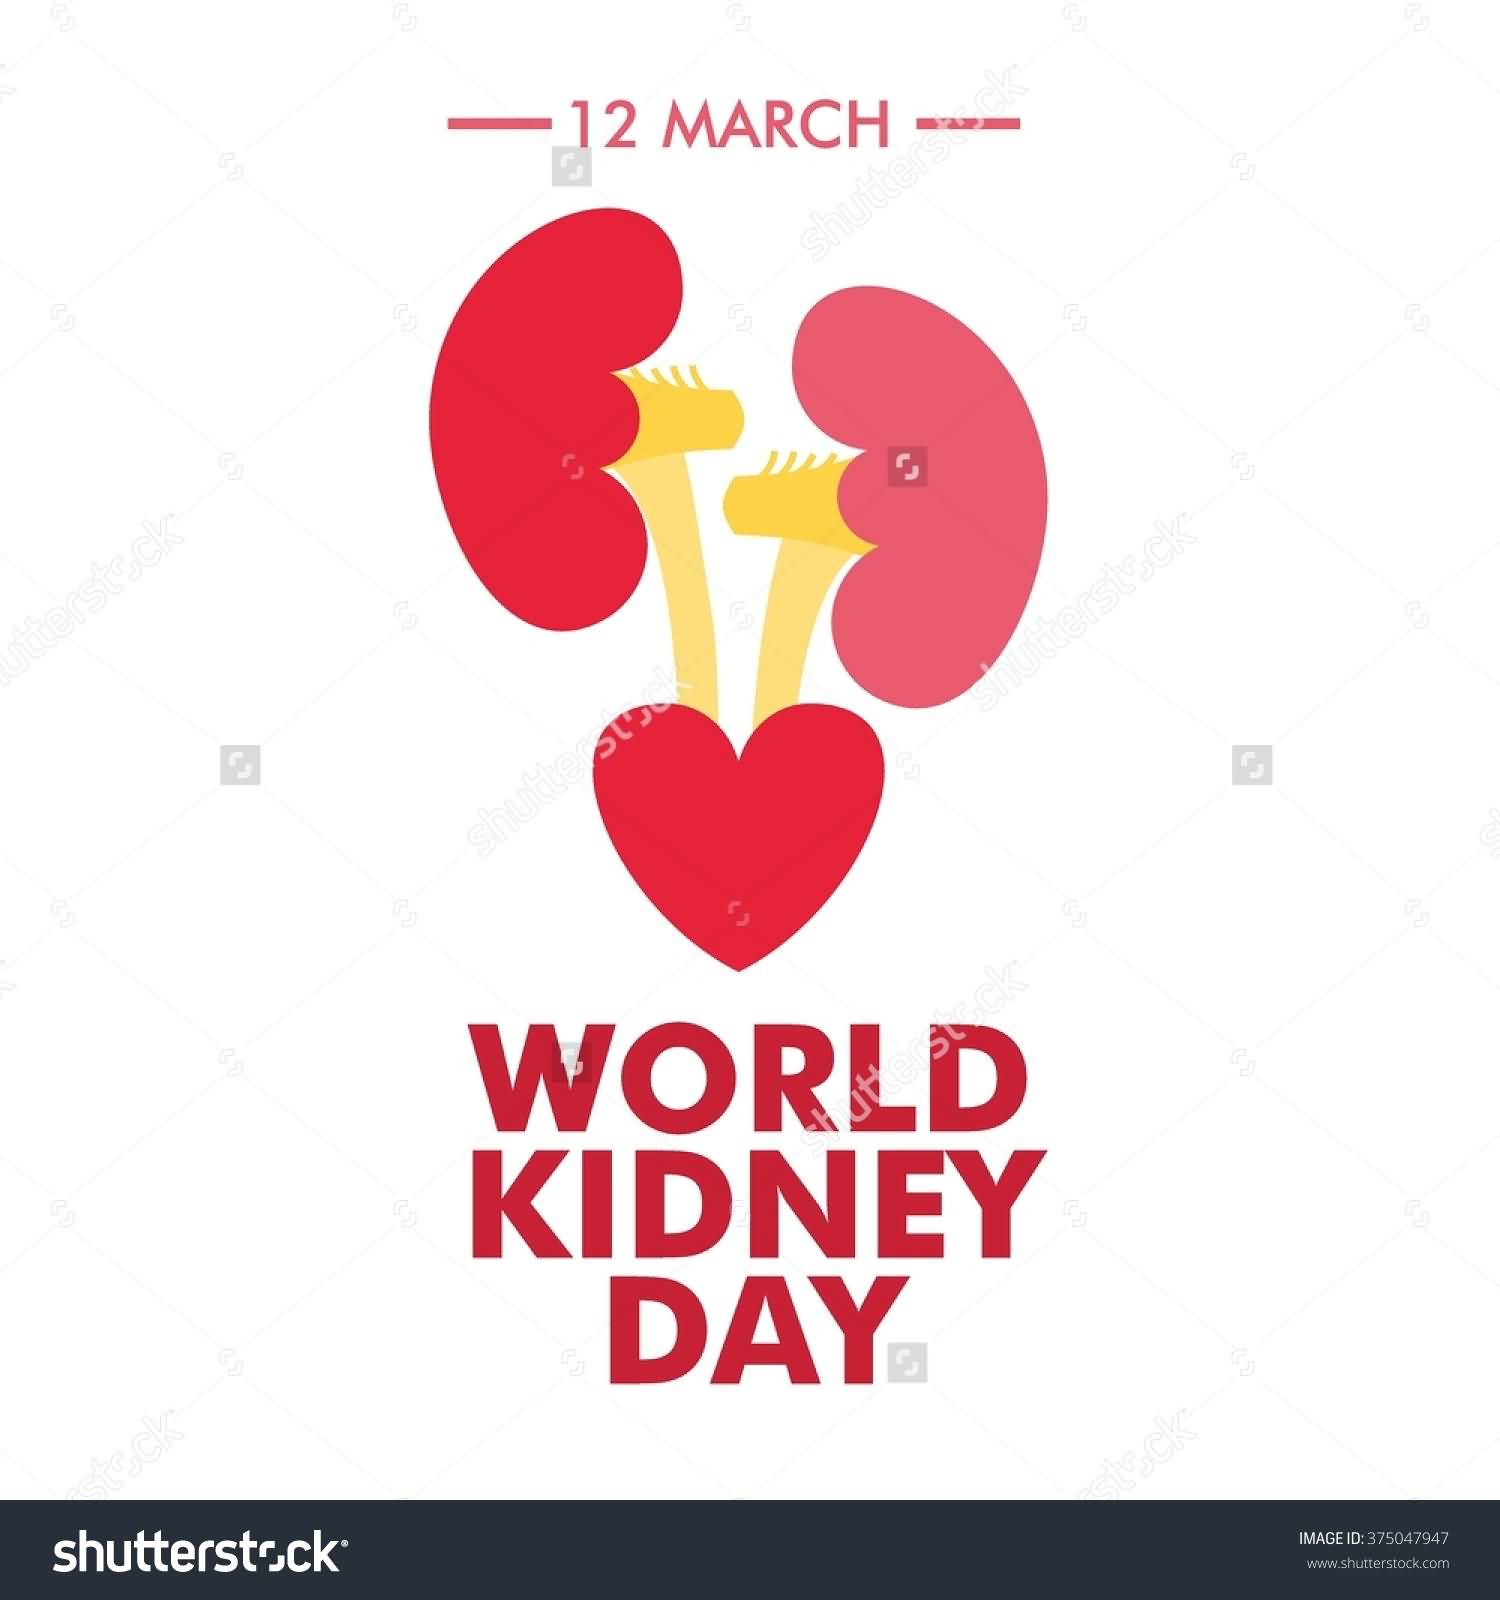 12 March World Kidney Day Illustration